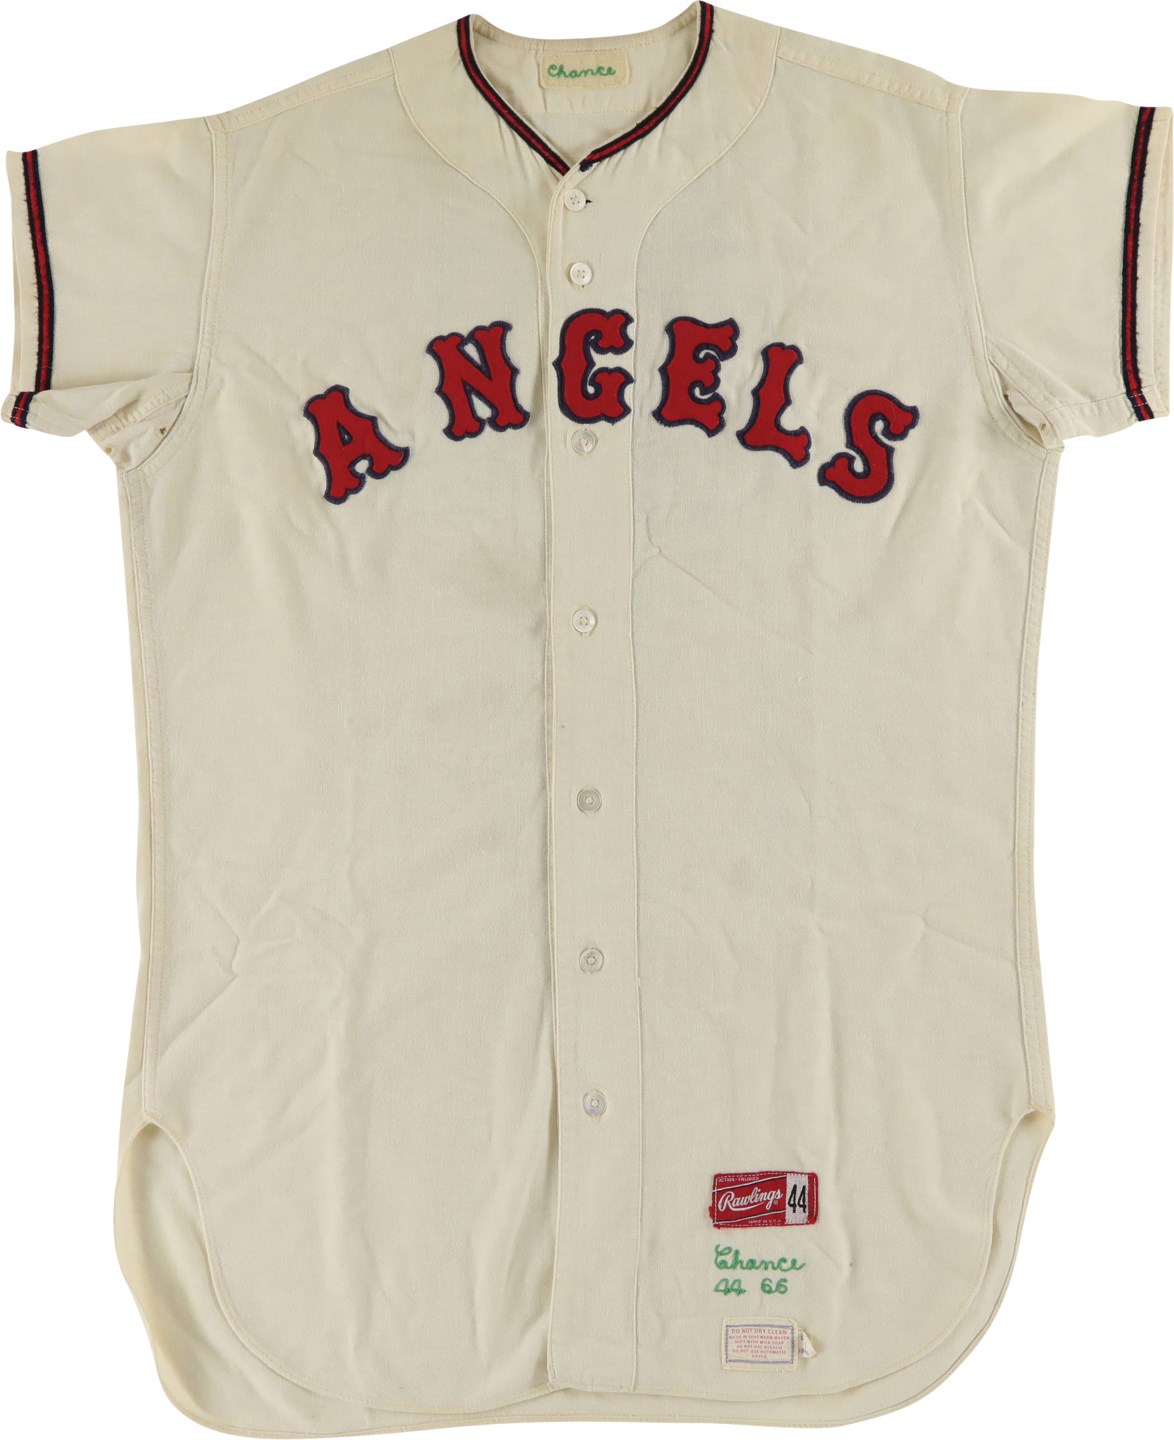 Baseball Equipment - 1966 Dean Chance California Angels Game Worn Jersey